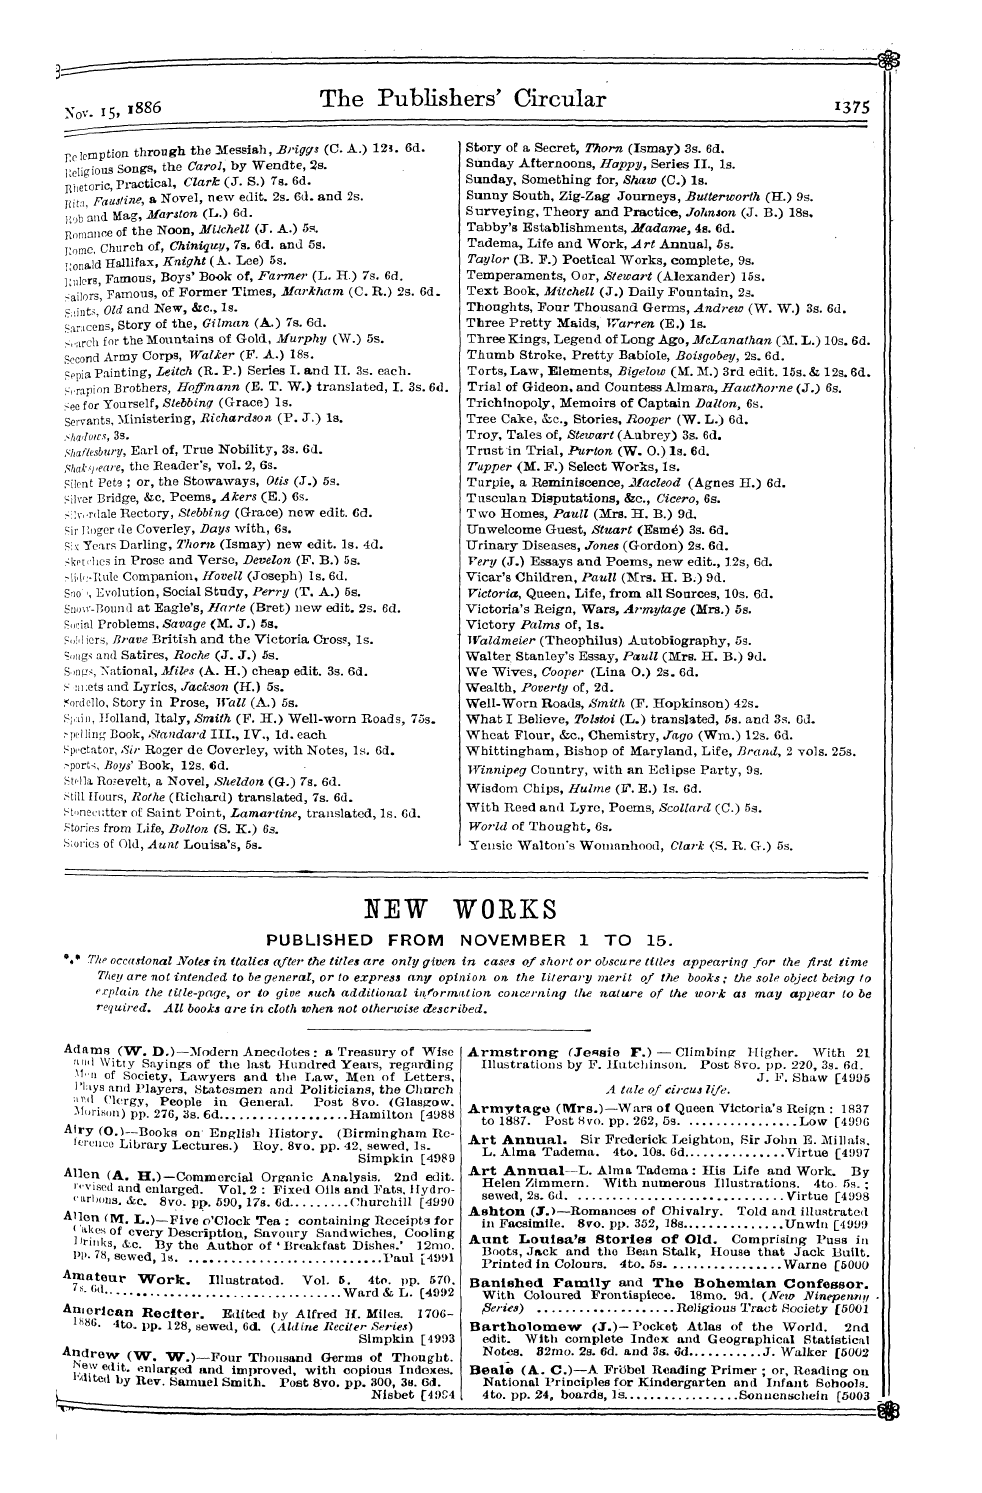 Publishers’ Circular (1880-1890): jS F Y, 1st edition - Lgg6 The Publishers' Circular I375